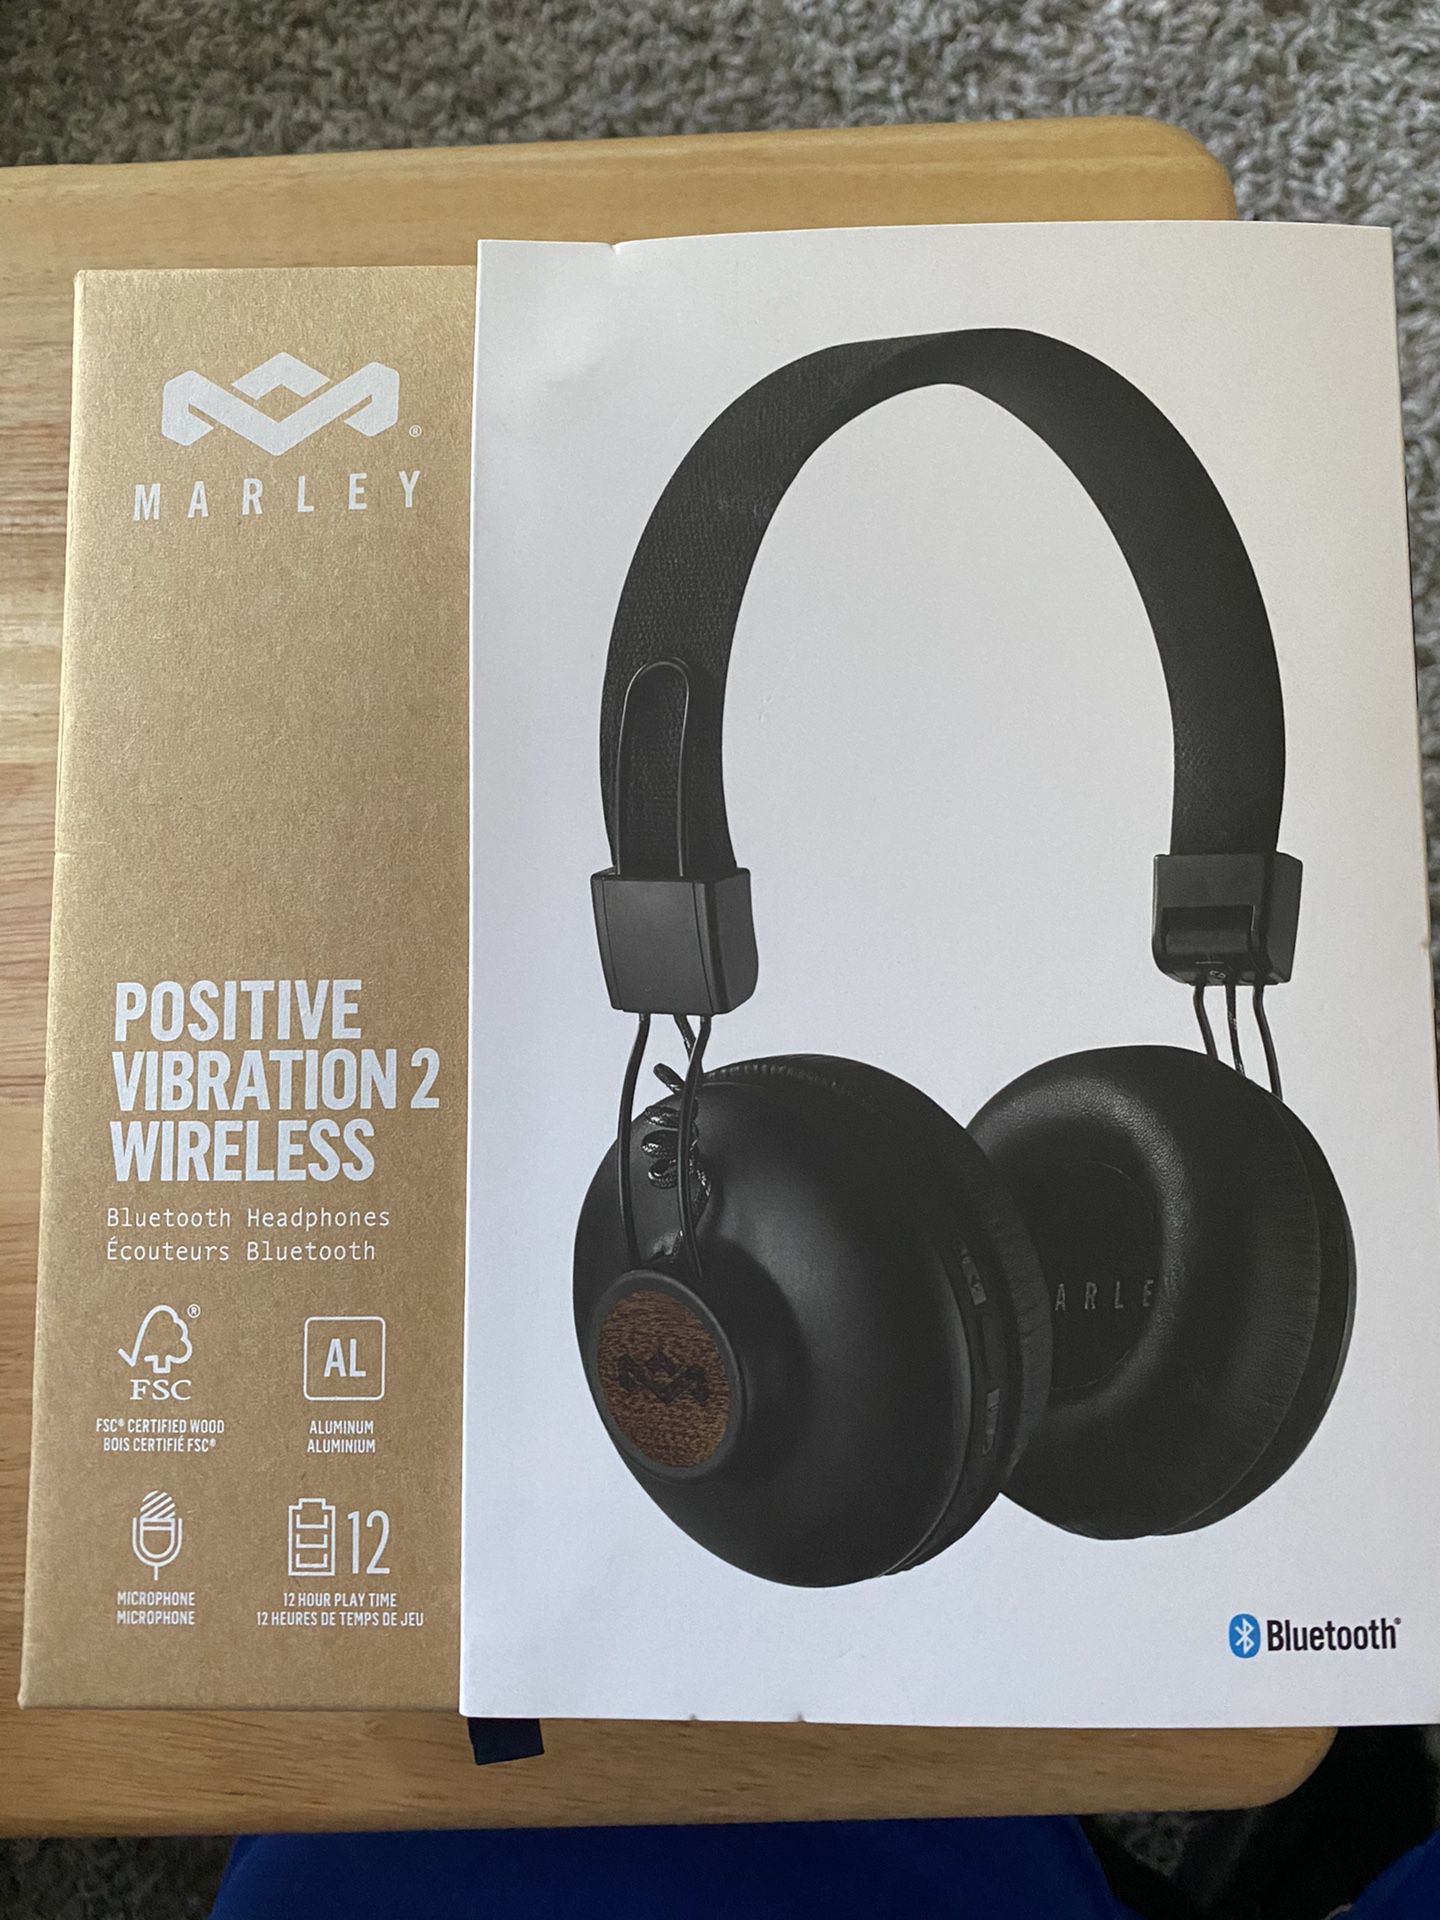 Marley Positive Vibration 2 wireless Bluetooth headphones